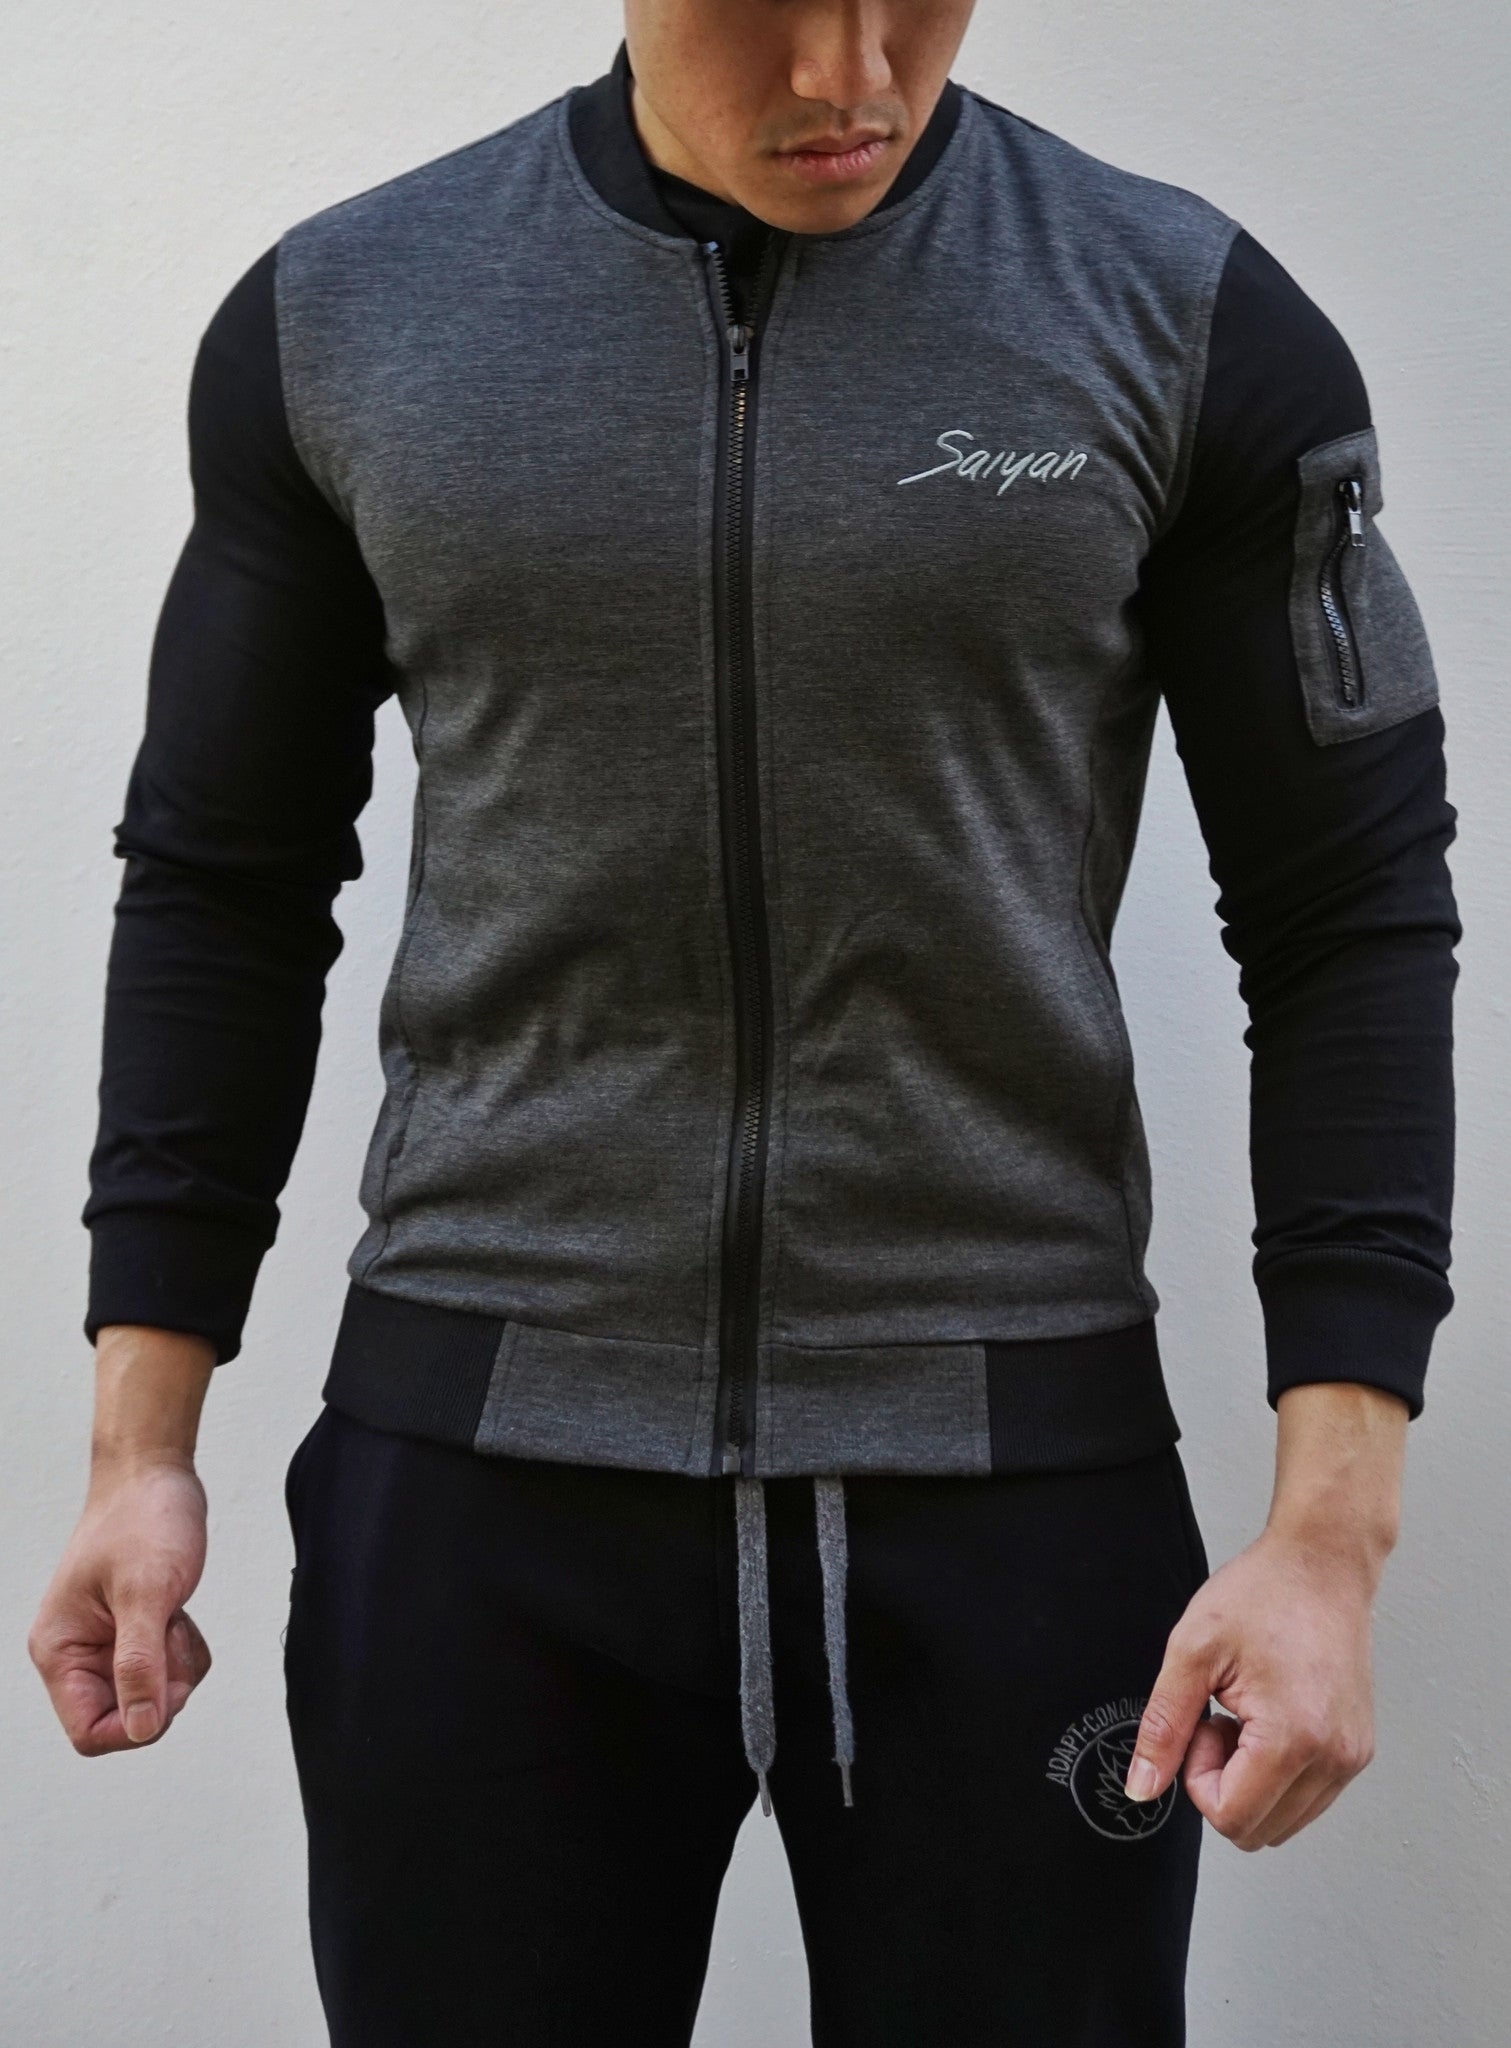 'Saiyan' Signature Men's Raglan Jacket - Grey/Black - Saiyan Evolution Online Shop Worldwide Shipping - 1